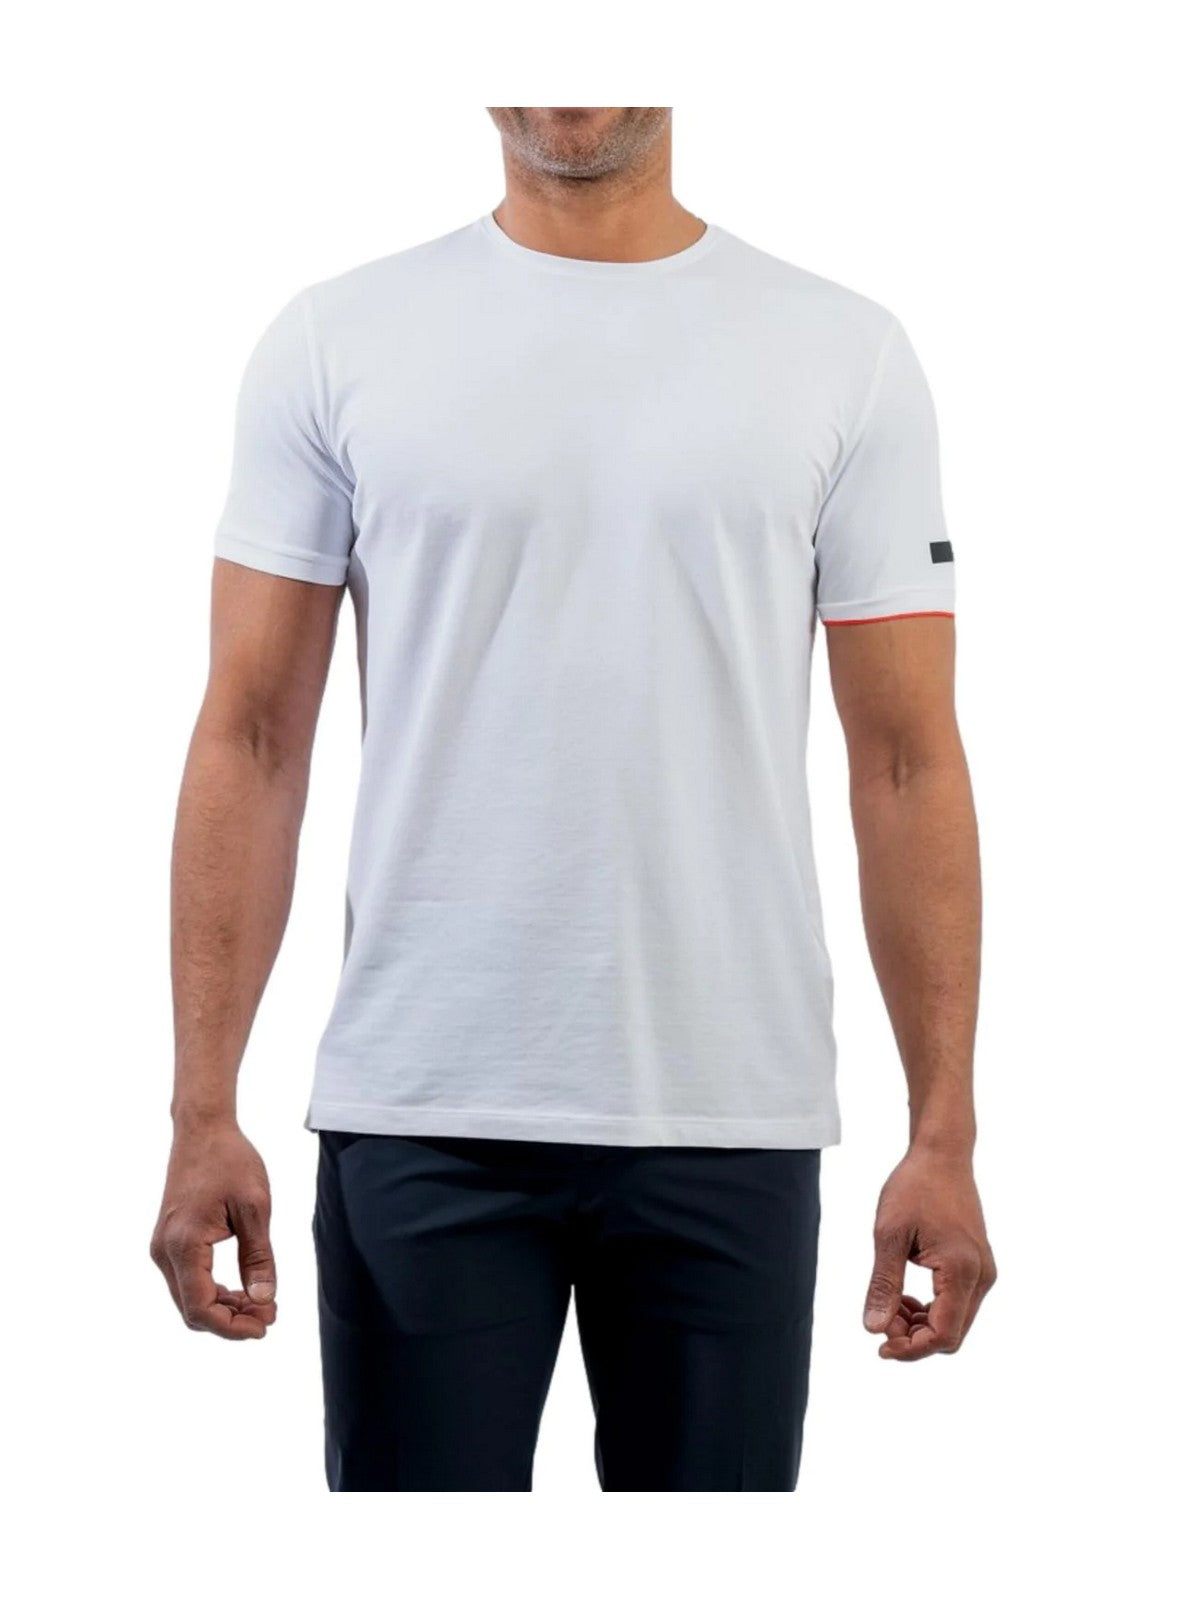 RRD T-Shirt e Polo Uomo  23138 09 Bianco